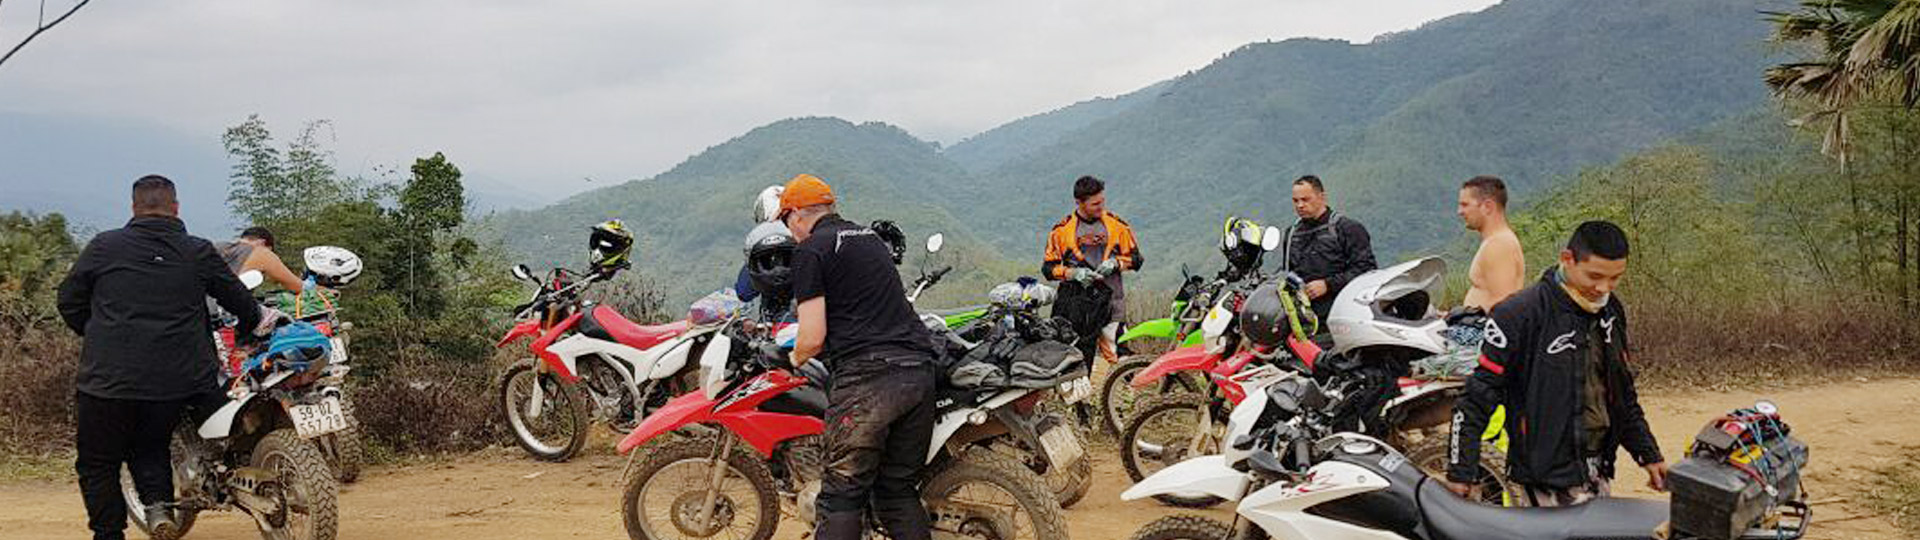 Explore Cambodia By Motorbike Tours  - 10 Days